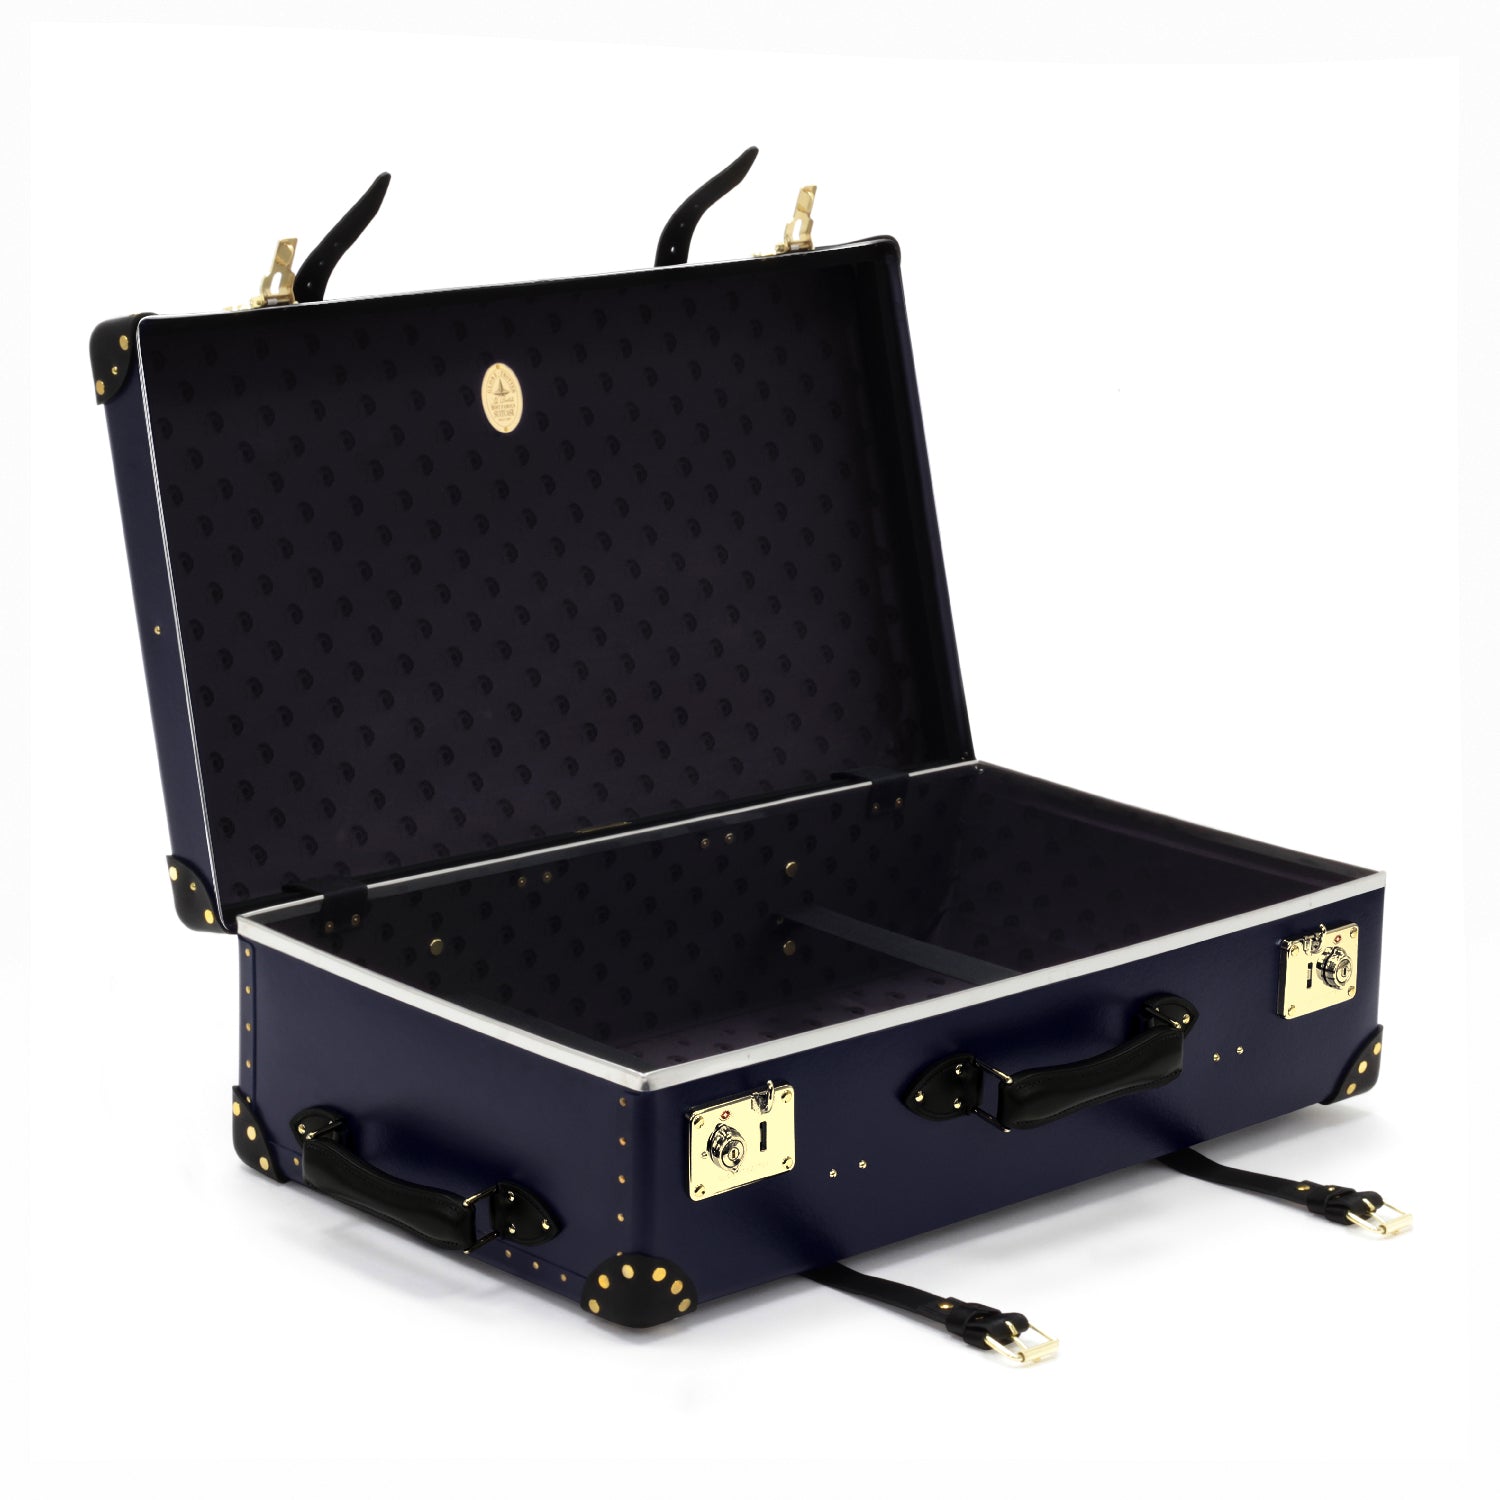 Spectre · Large Suitcase | Navy/Black - GLOBE-TROTTER